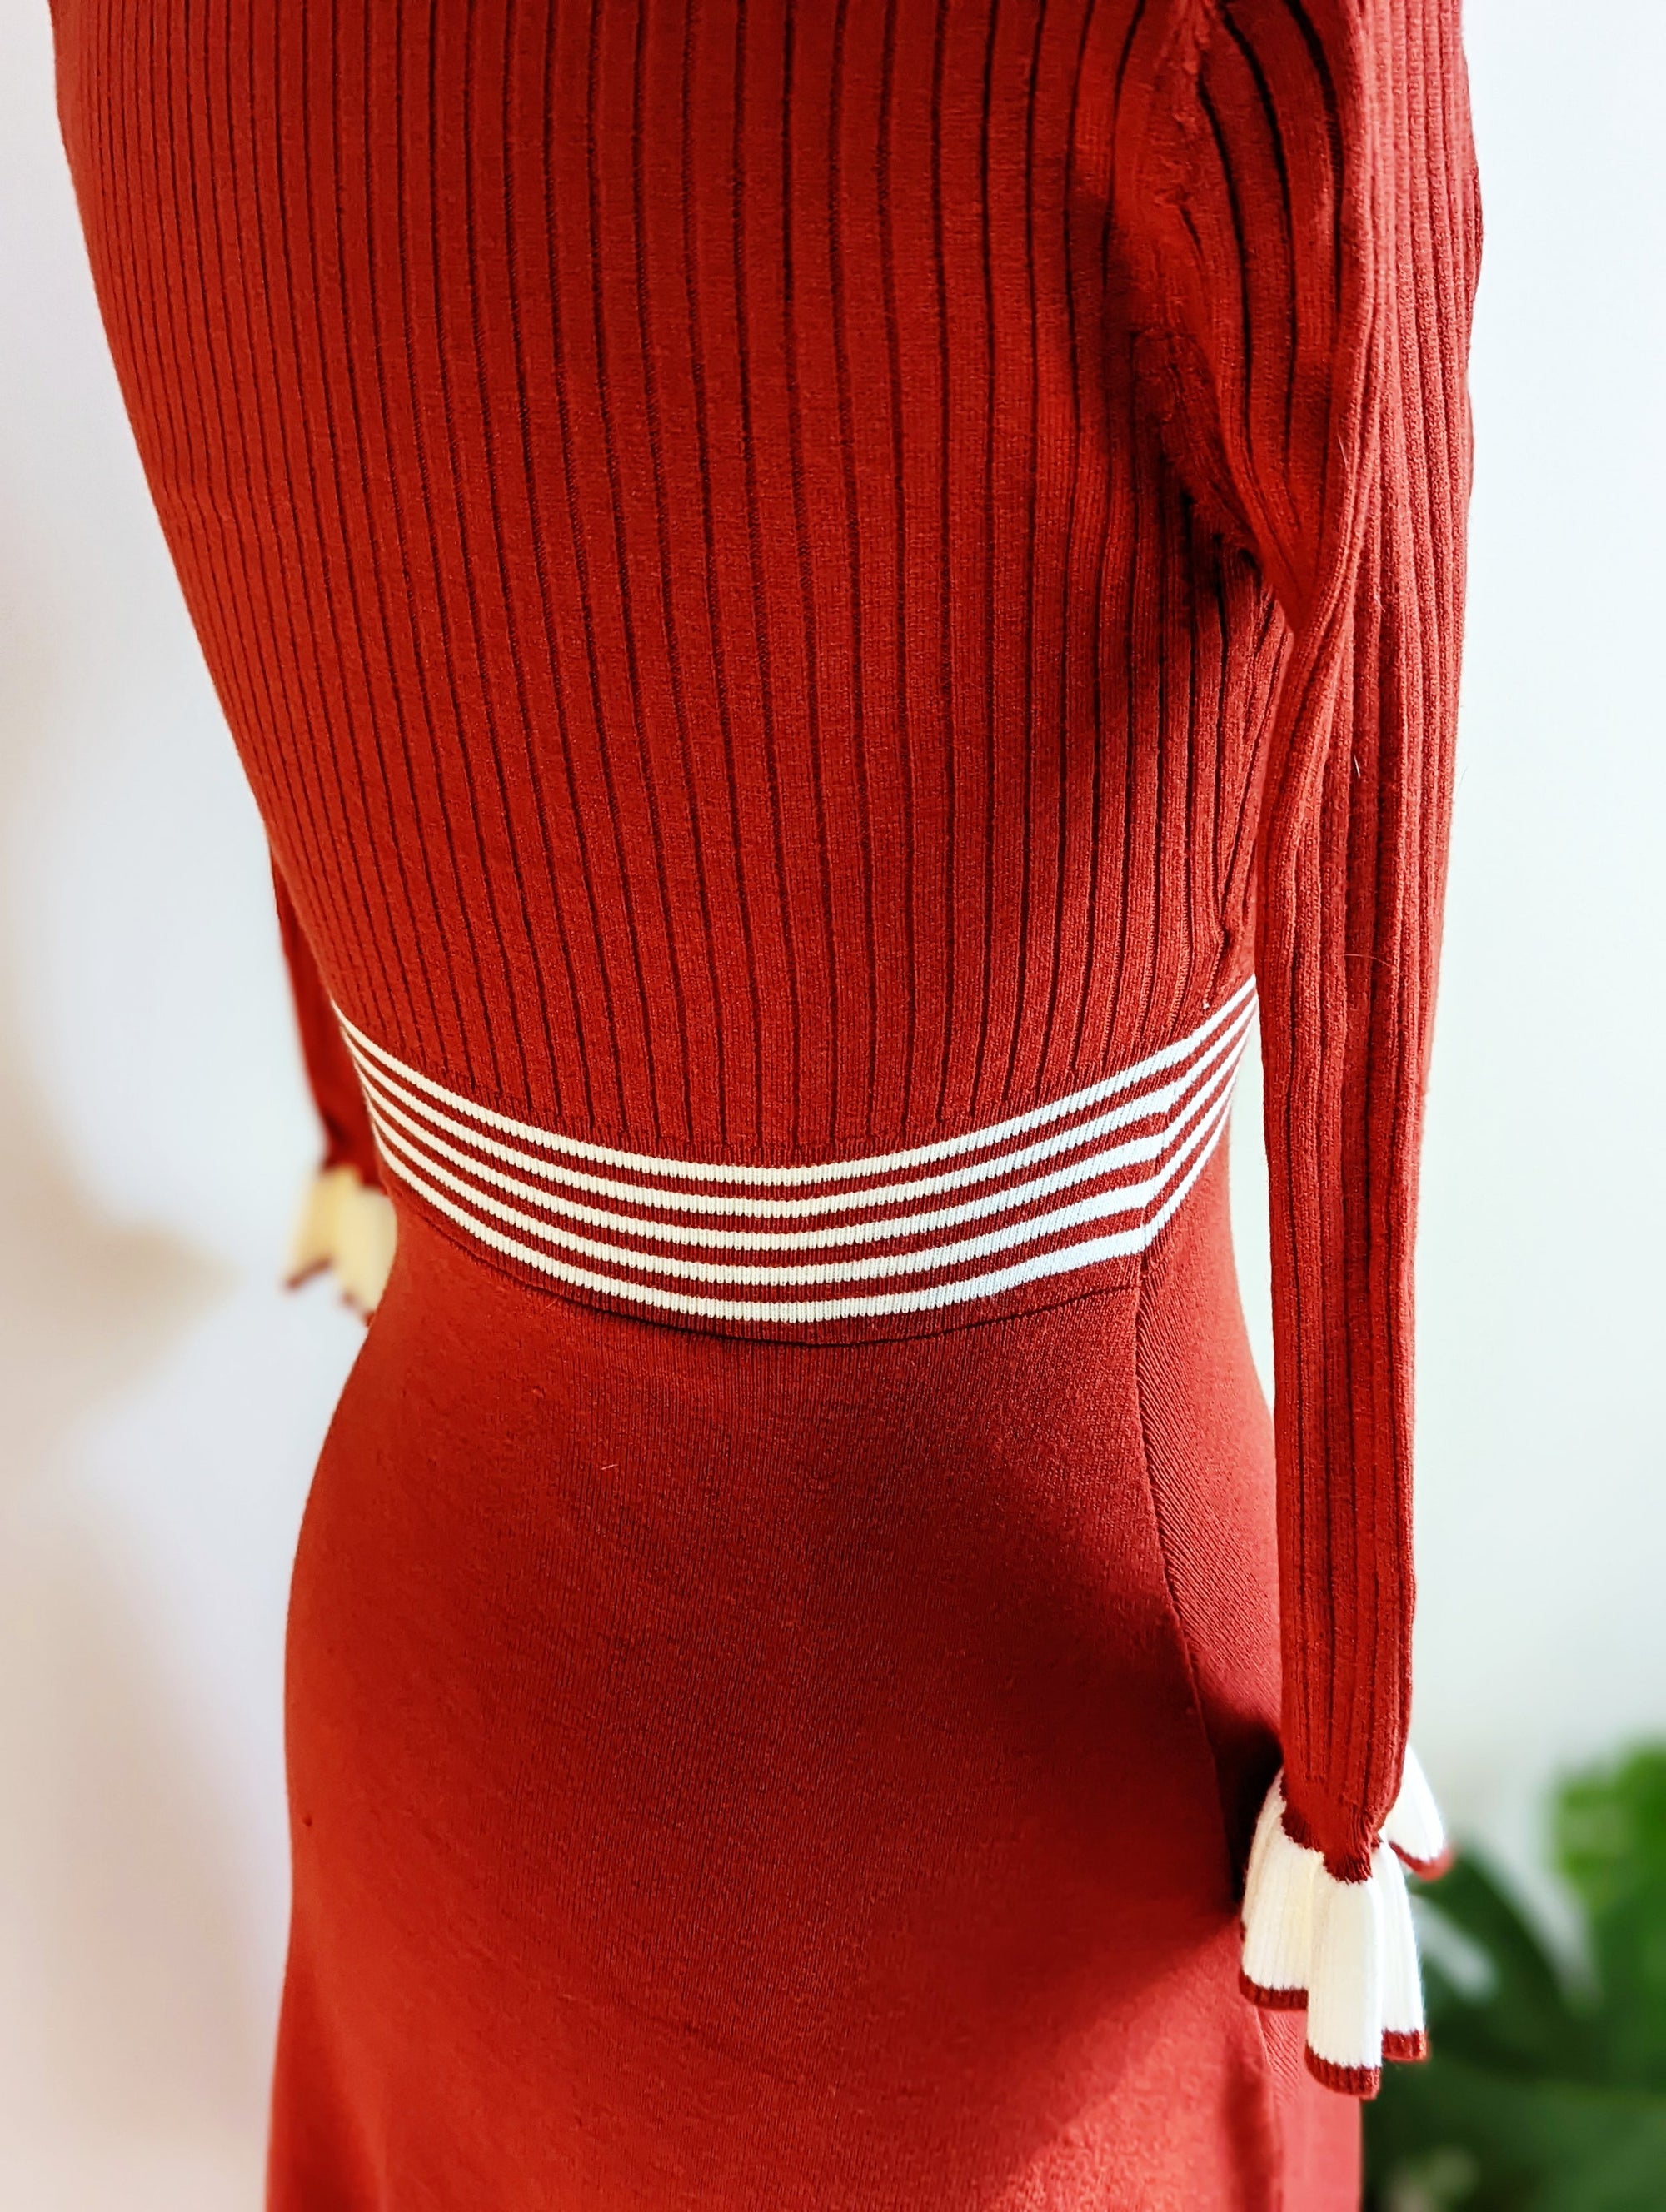 Retro Style Sweater Dress